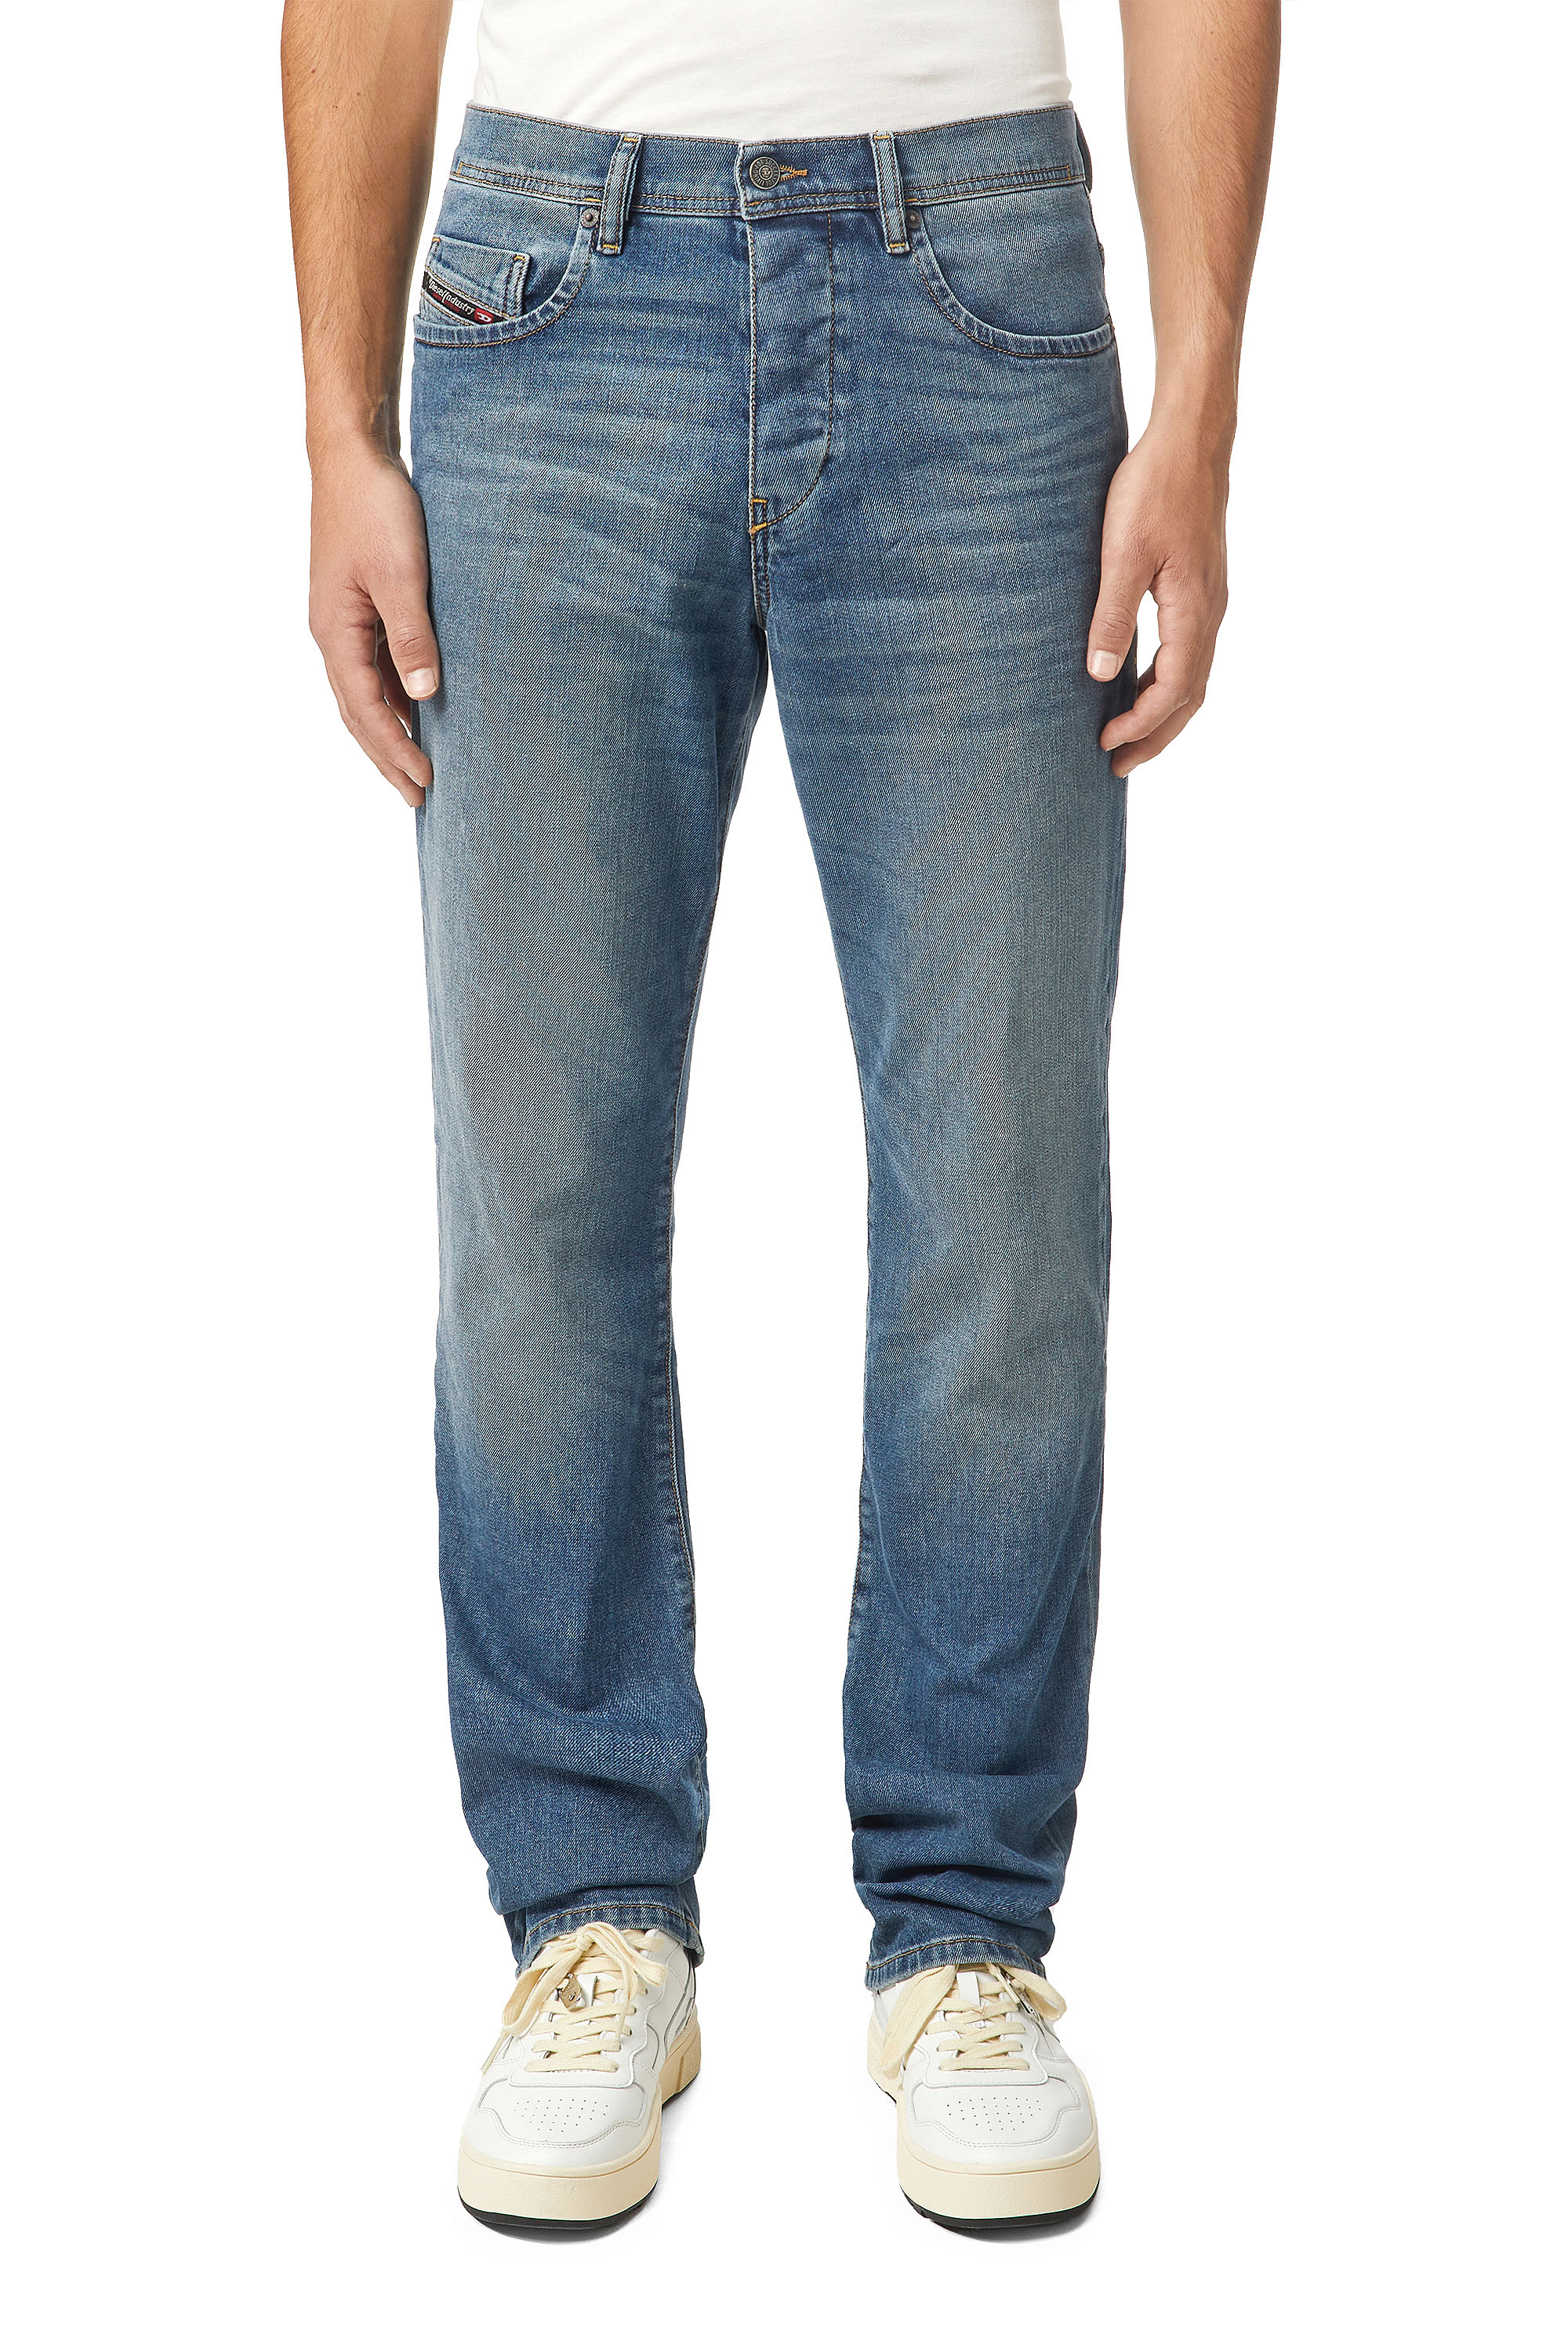 D-Vocs 009EI Bootcut Jeans, Medium blue - Jeans